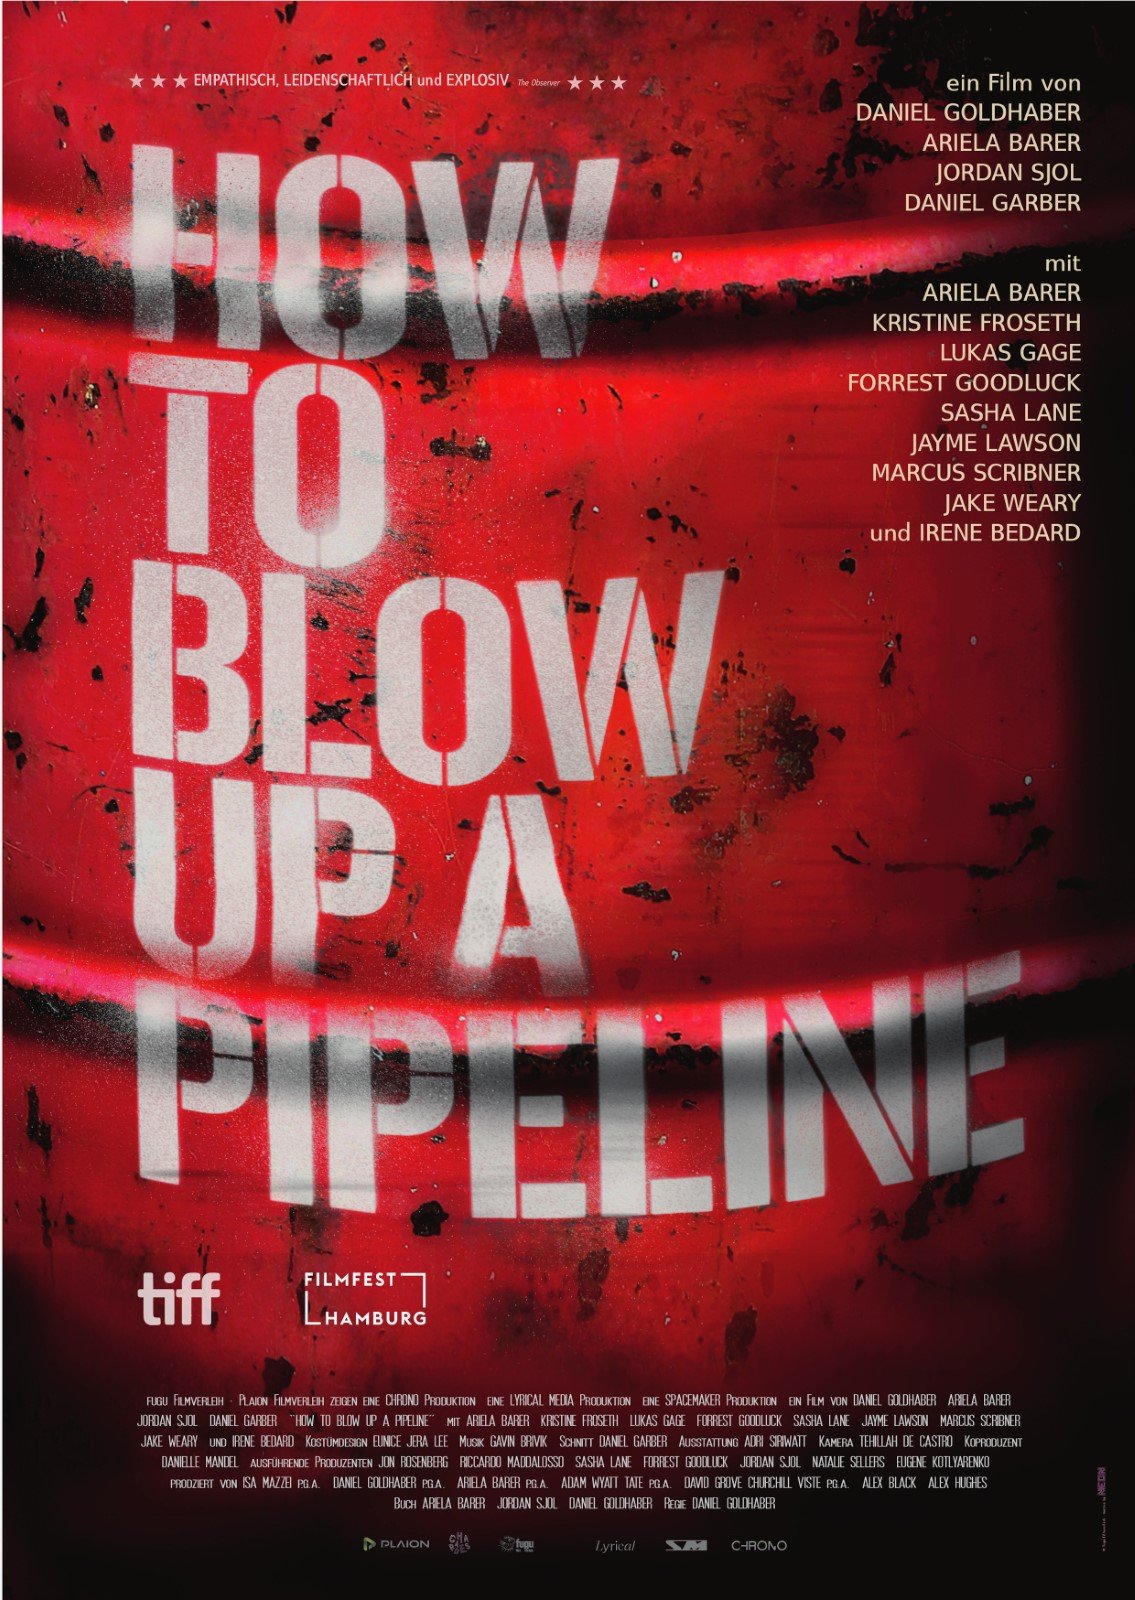 kinoprogramm-f-r-how-to-blow-up-a-pipeline-in-l-beck-filmstarts-de